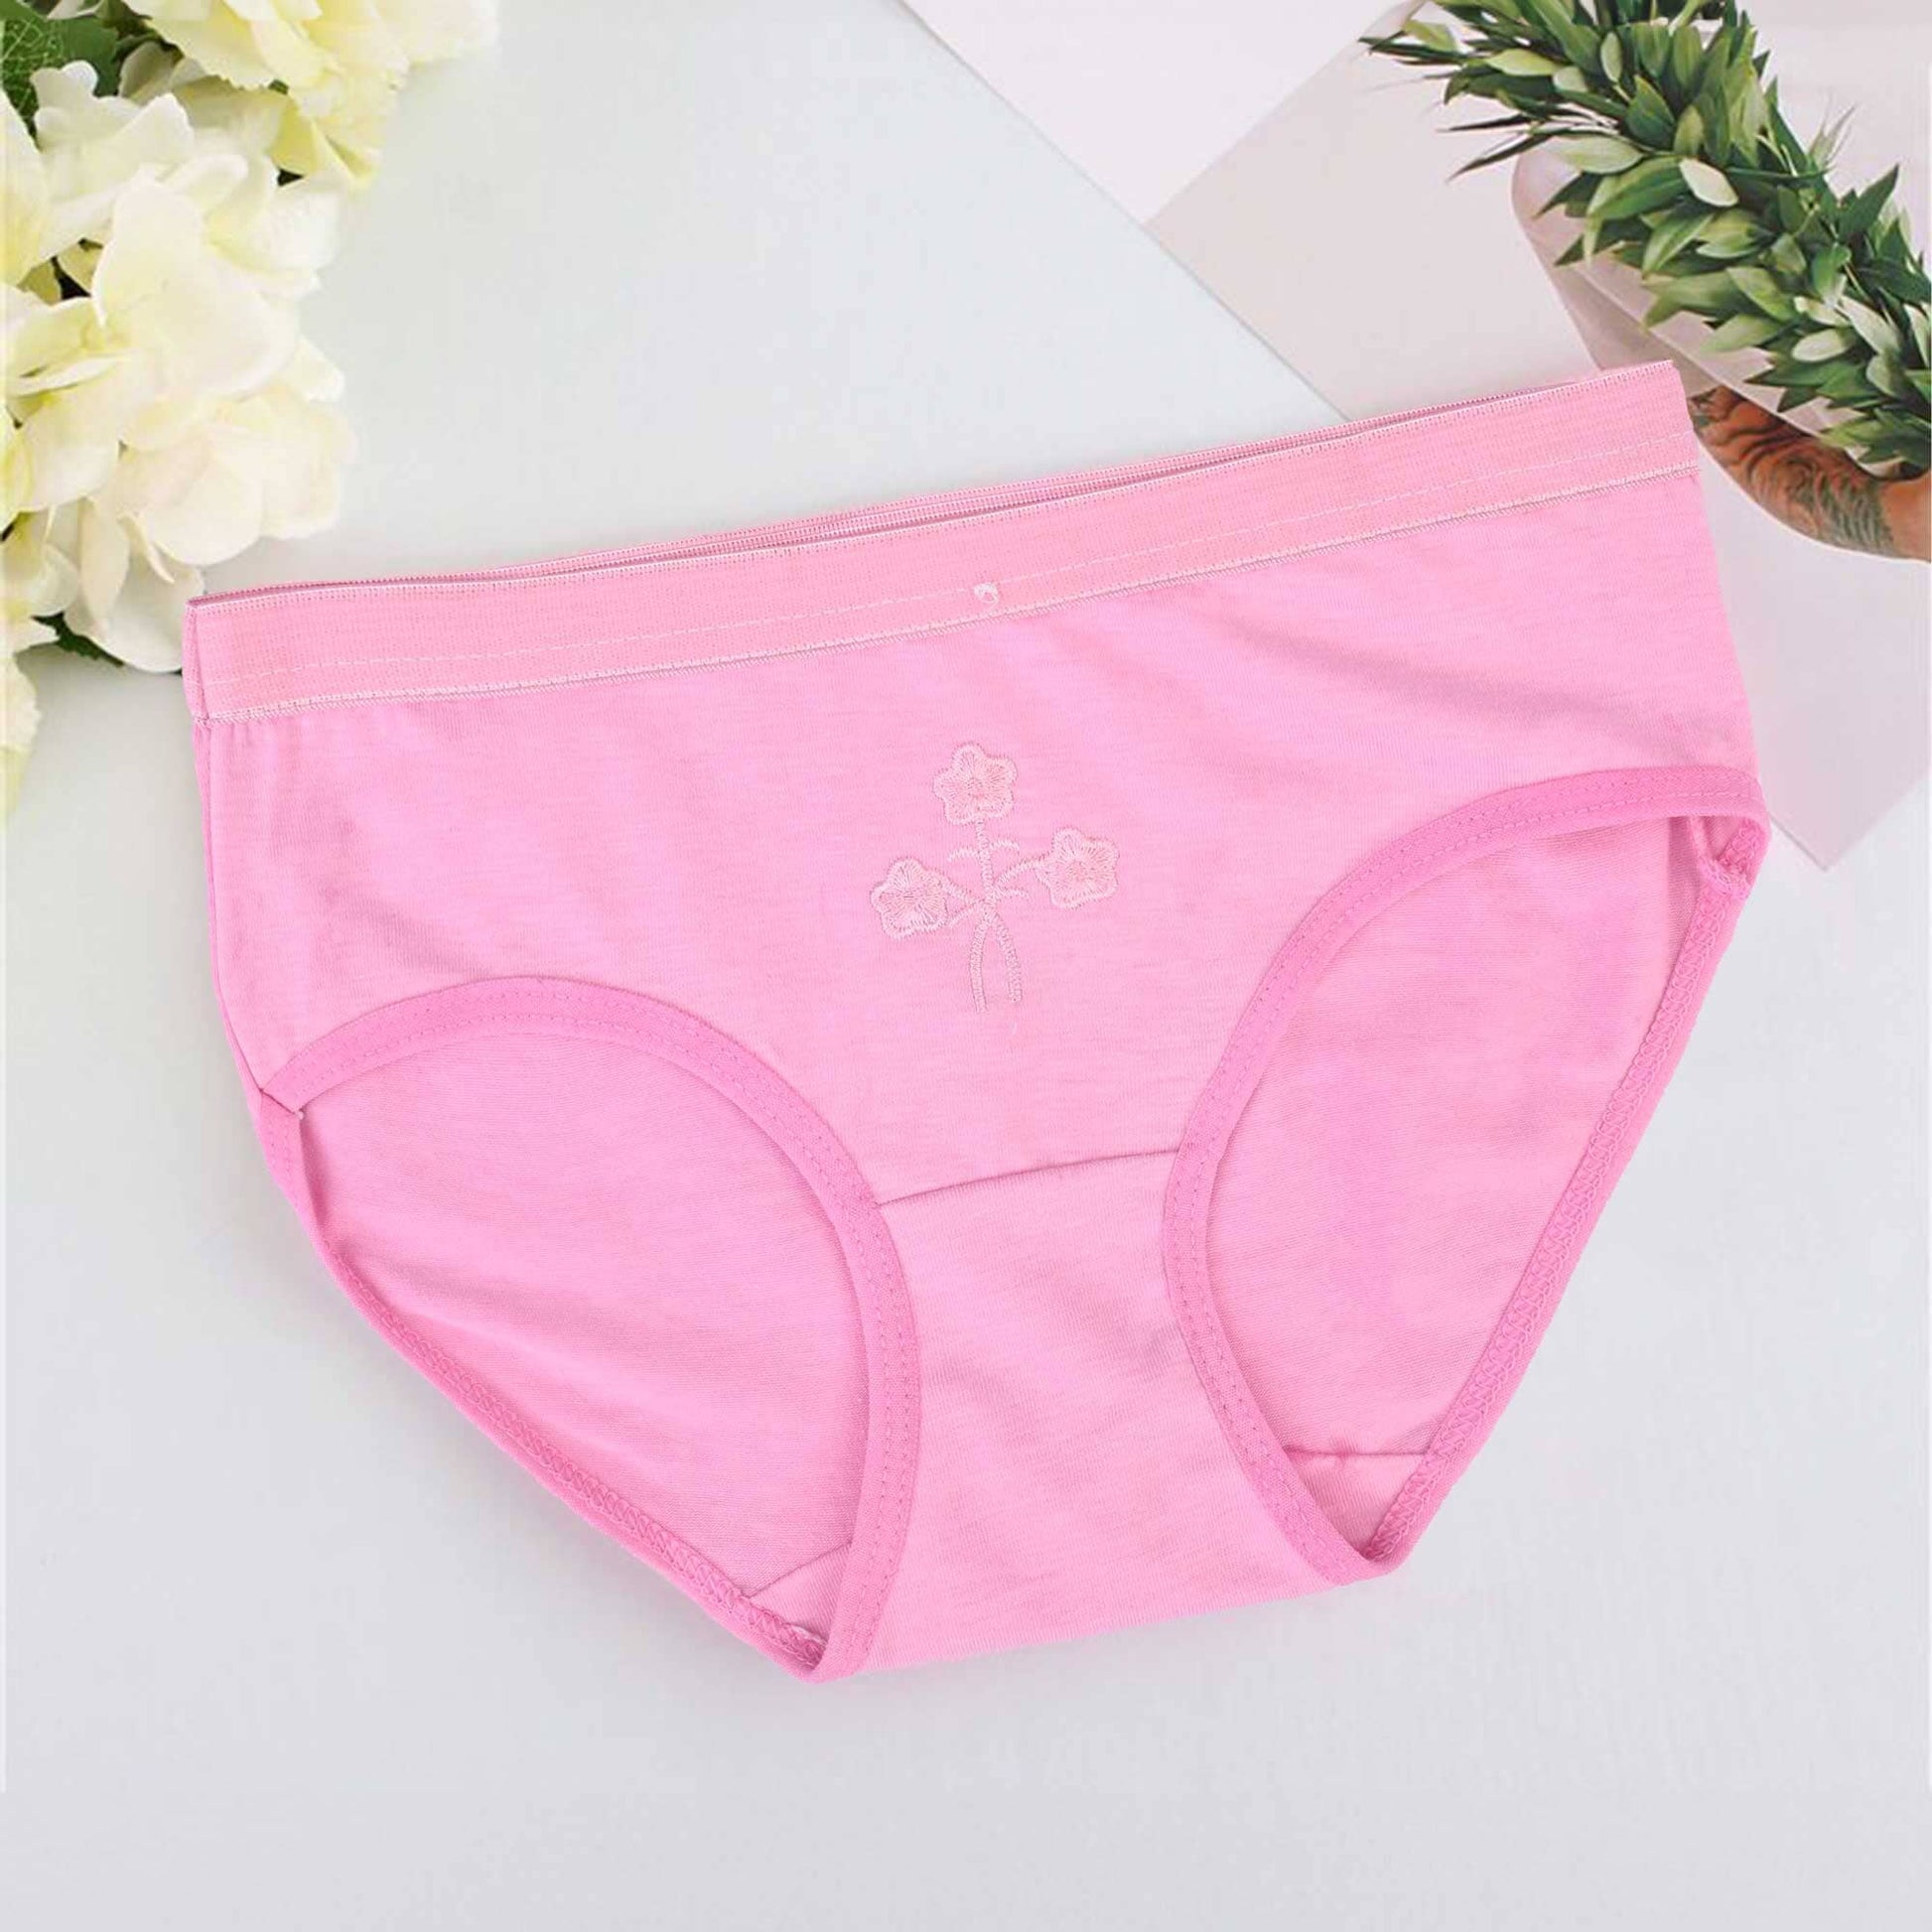 LZD Girl's/Women's Underwear Panties Women's Lingerie SRL Pink Waist-26-28 